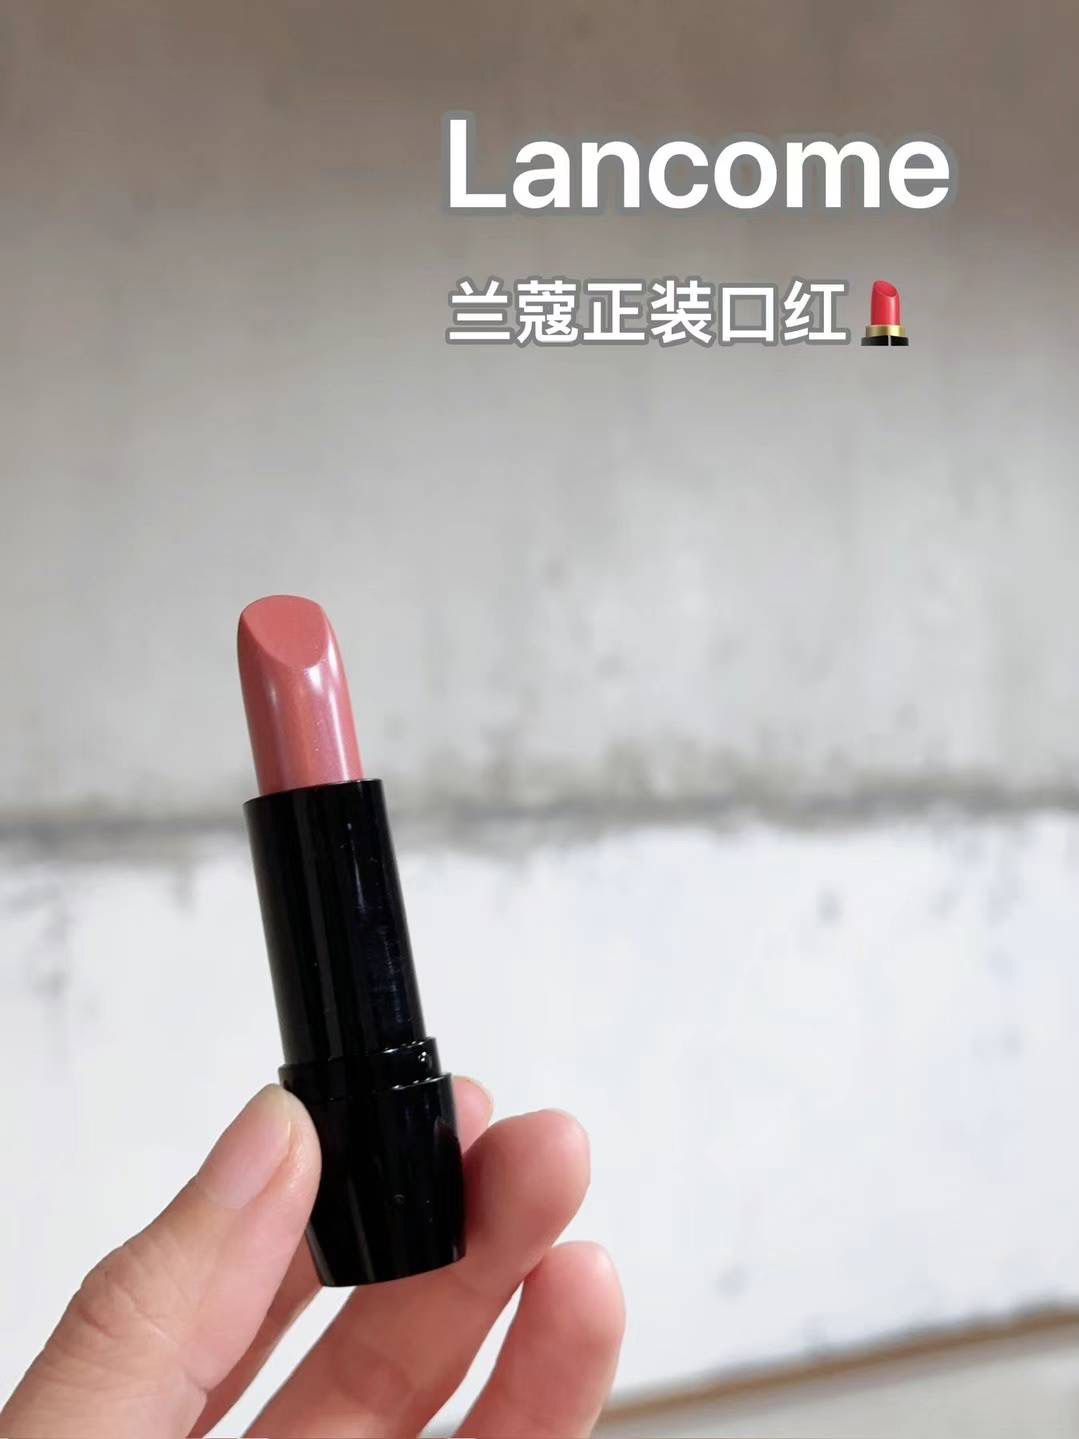 Brand new Lancome lipstick